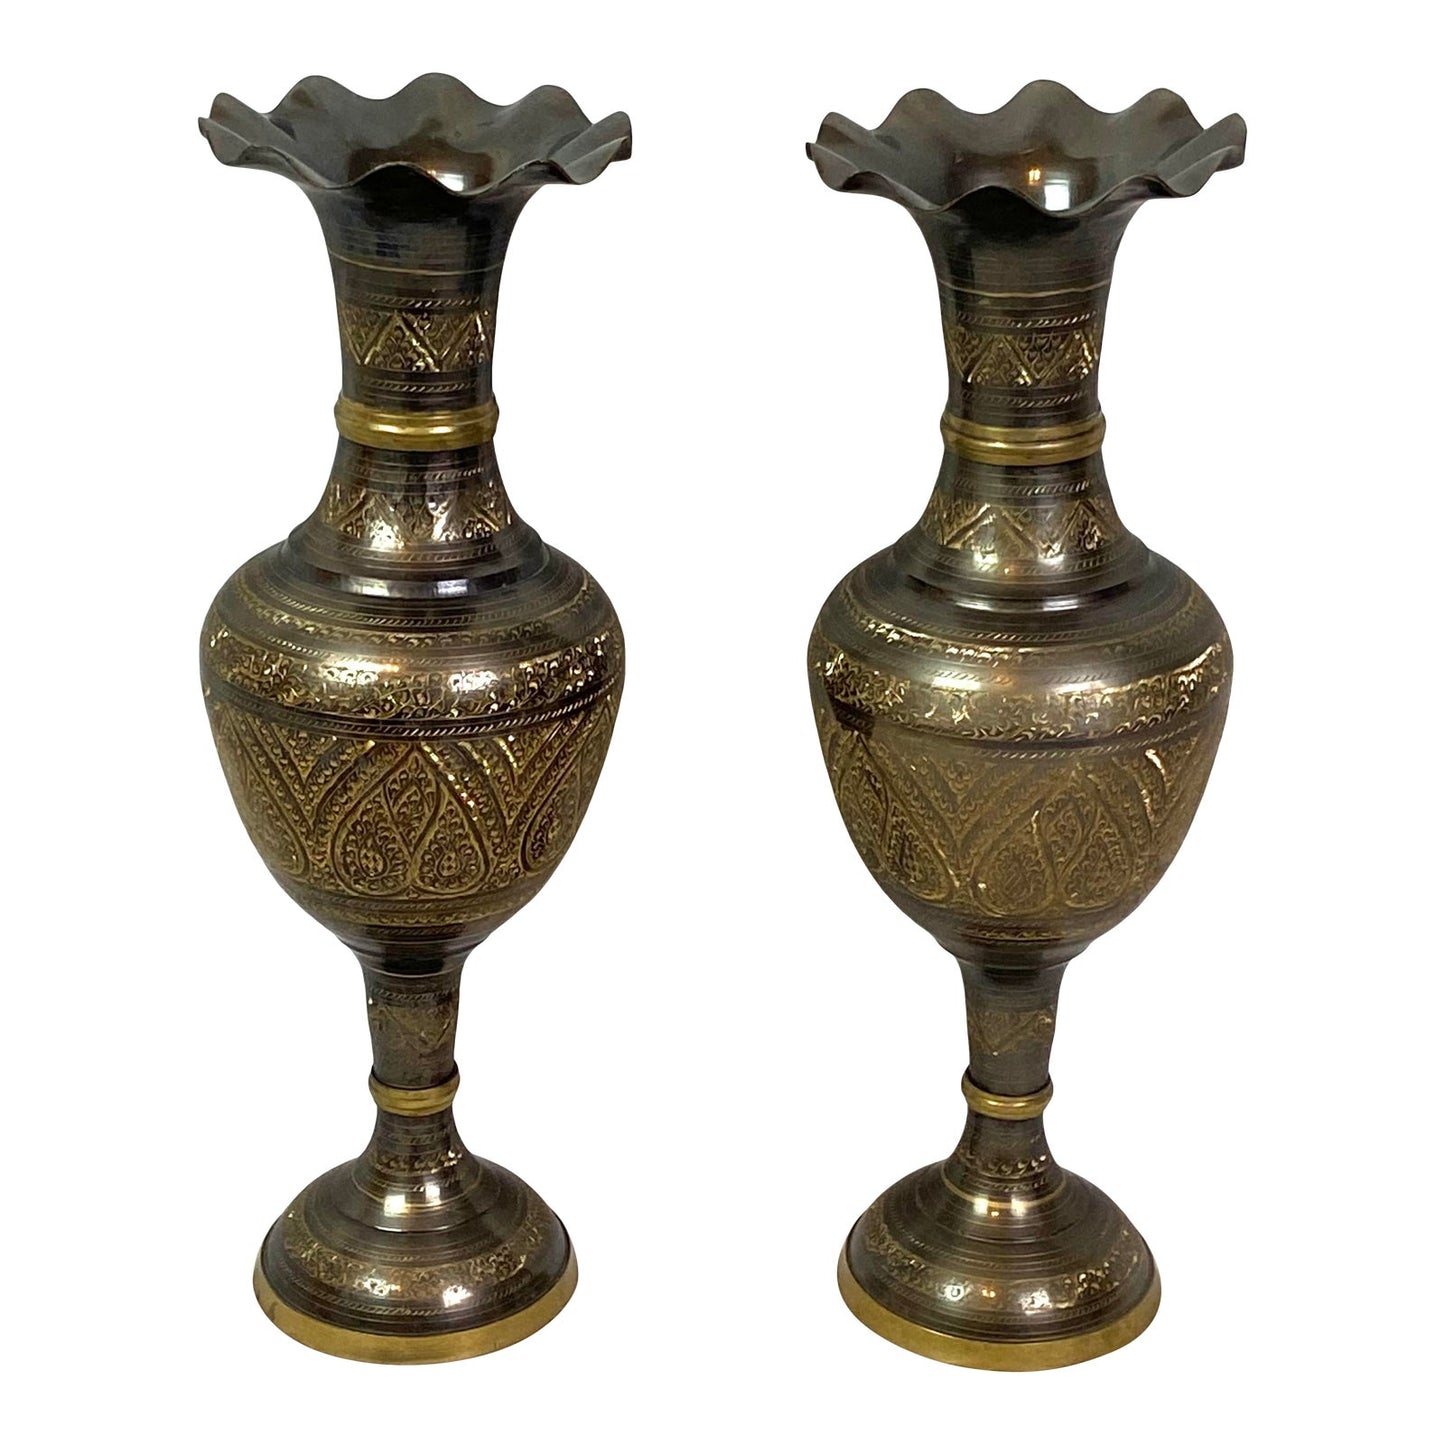 [SOLD] Bronze Medieval Middle Eastern Urns Vases - Pair of 2